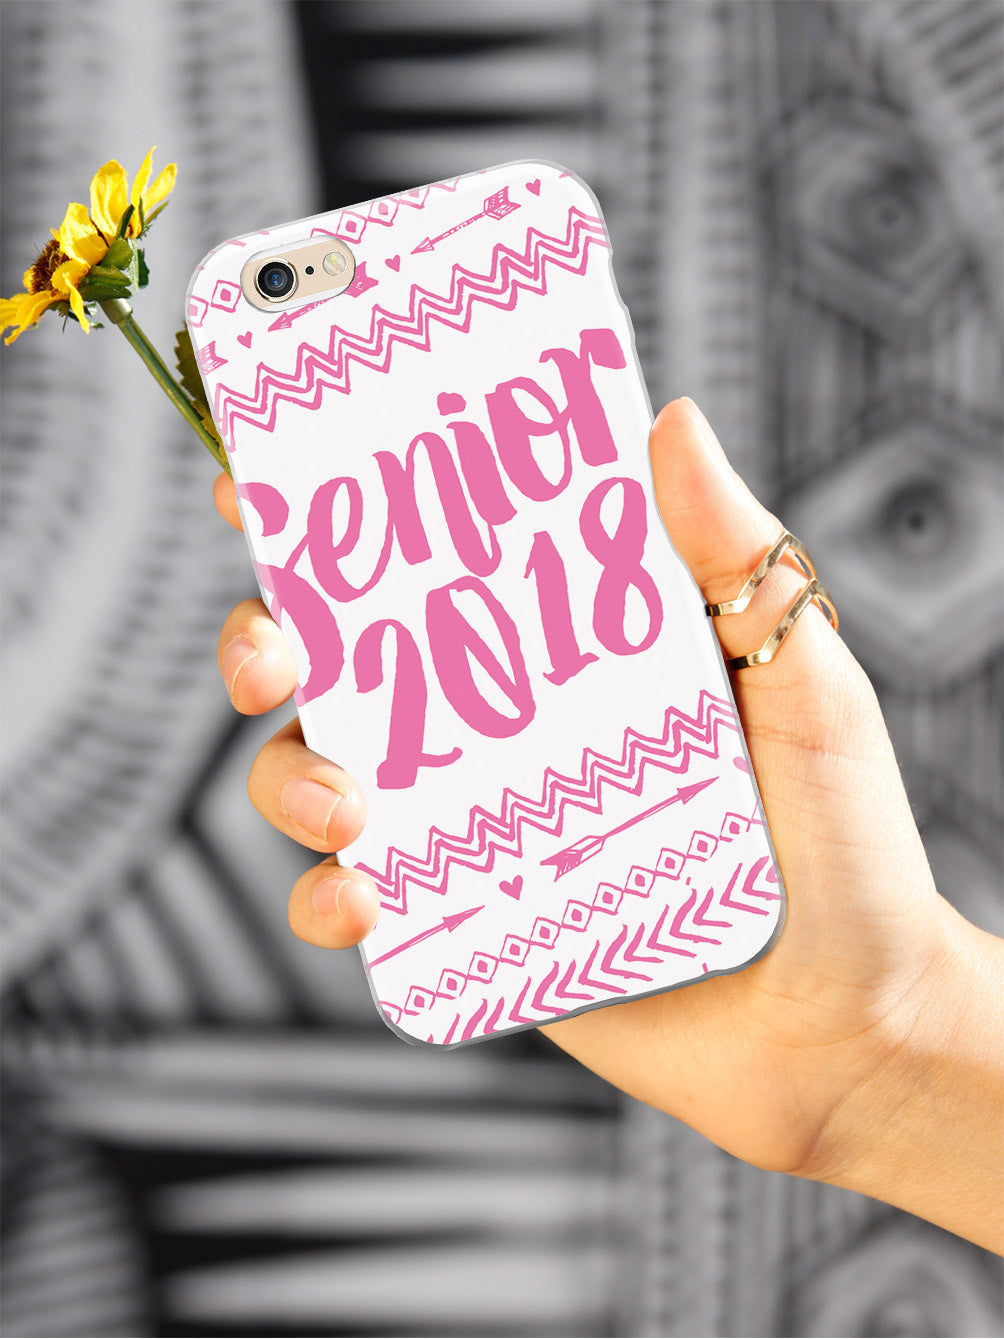 Senior 2018 - Pink Case